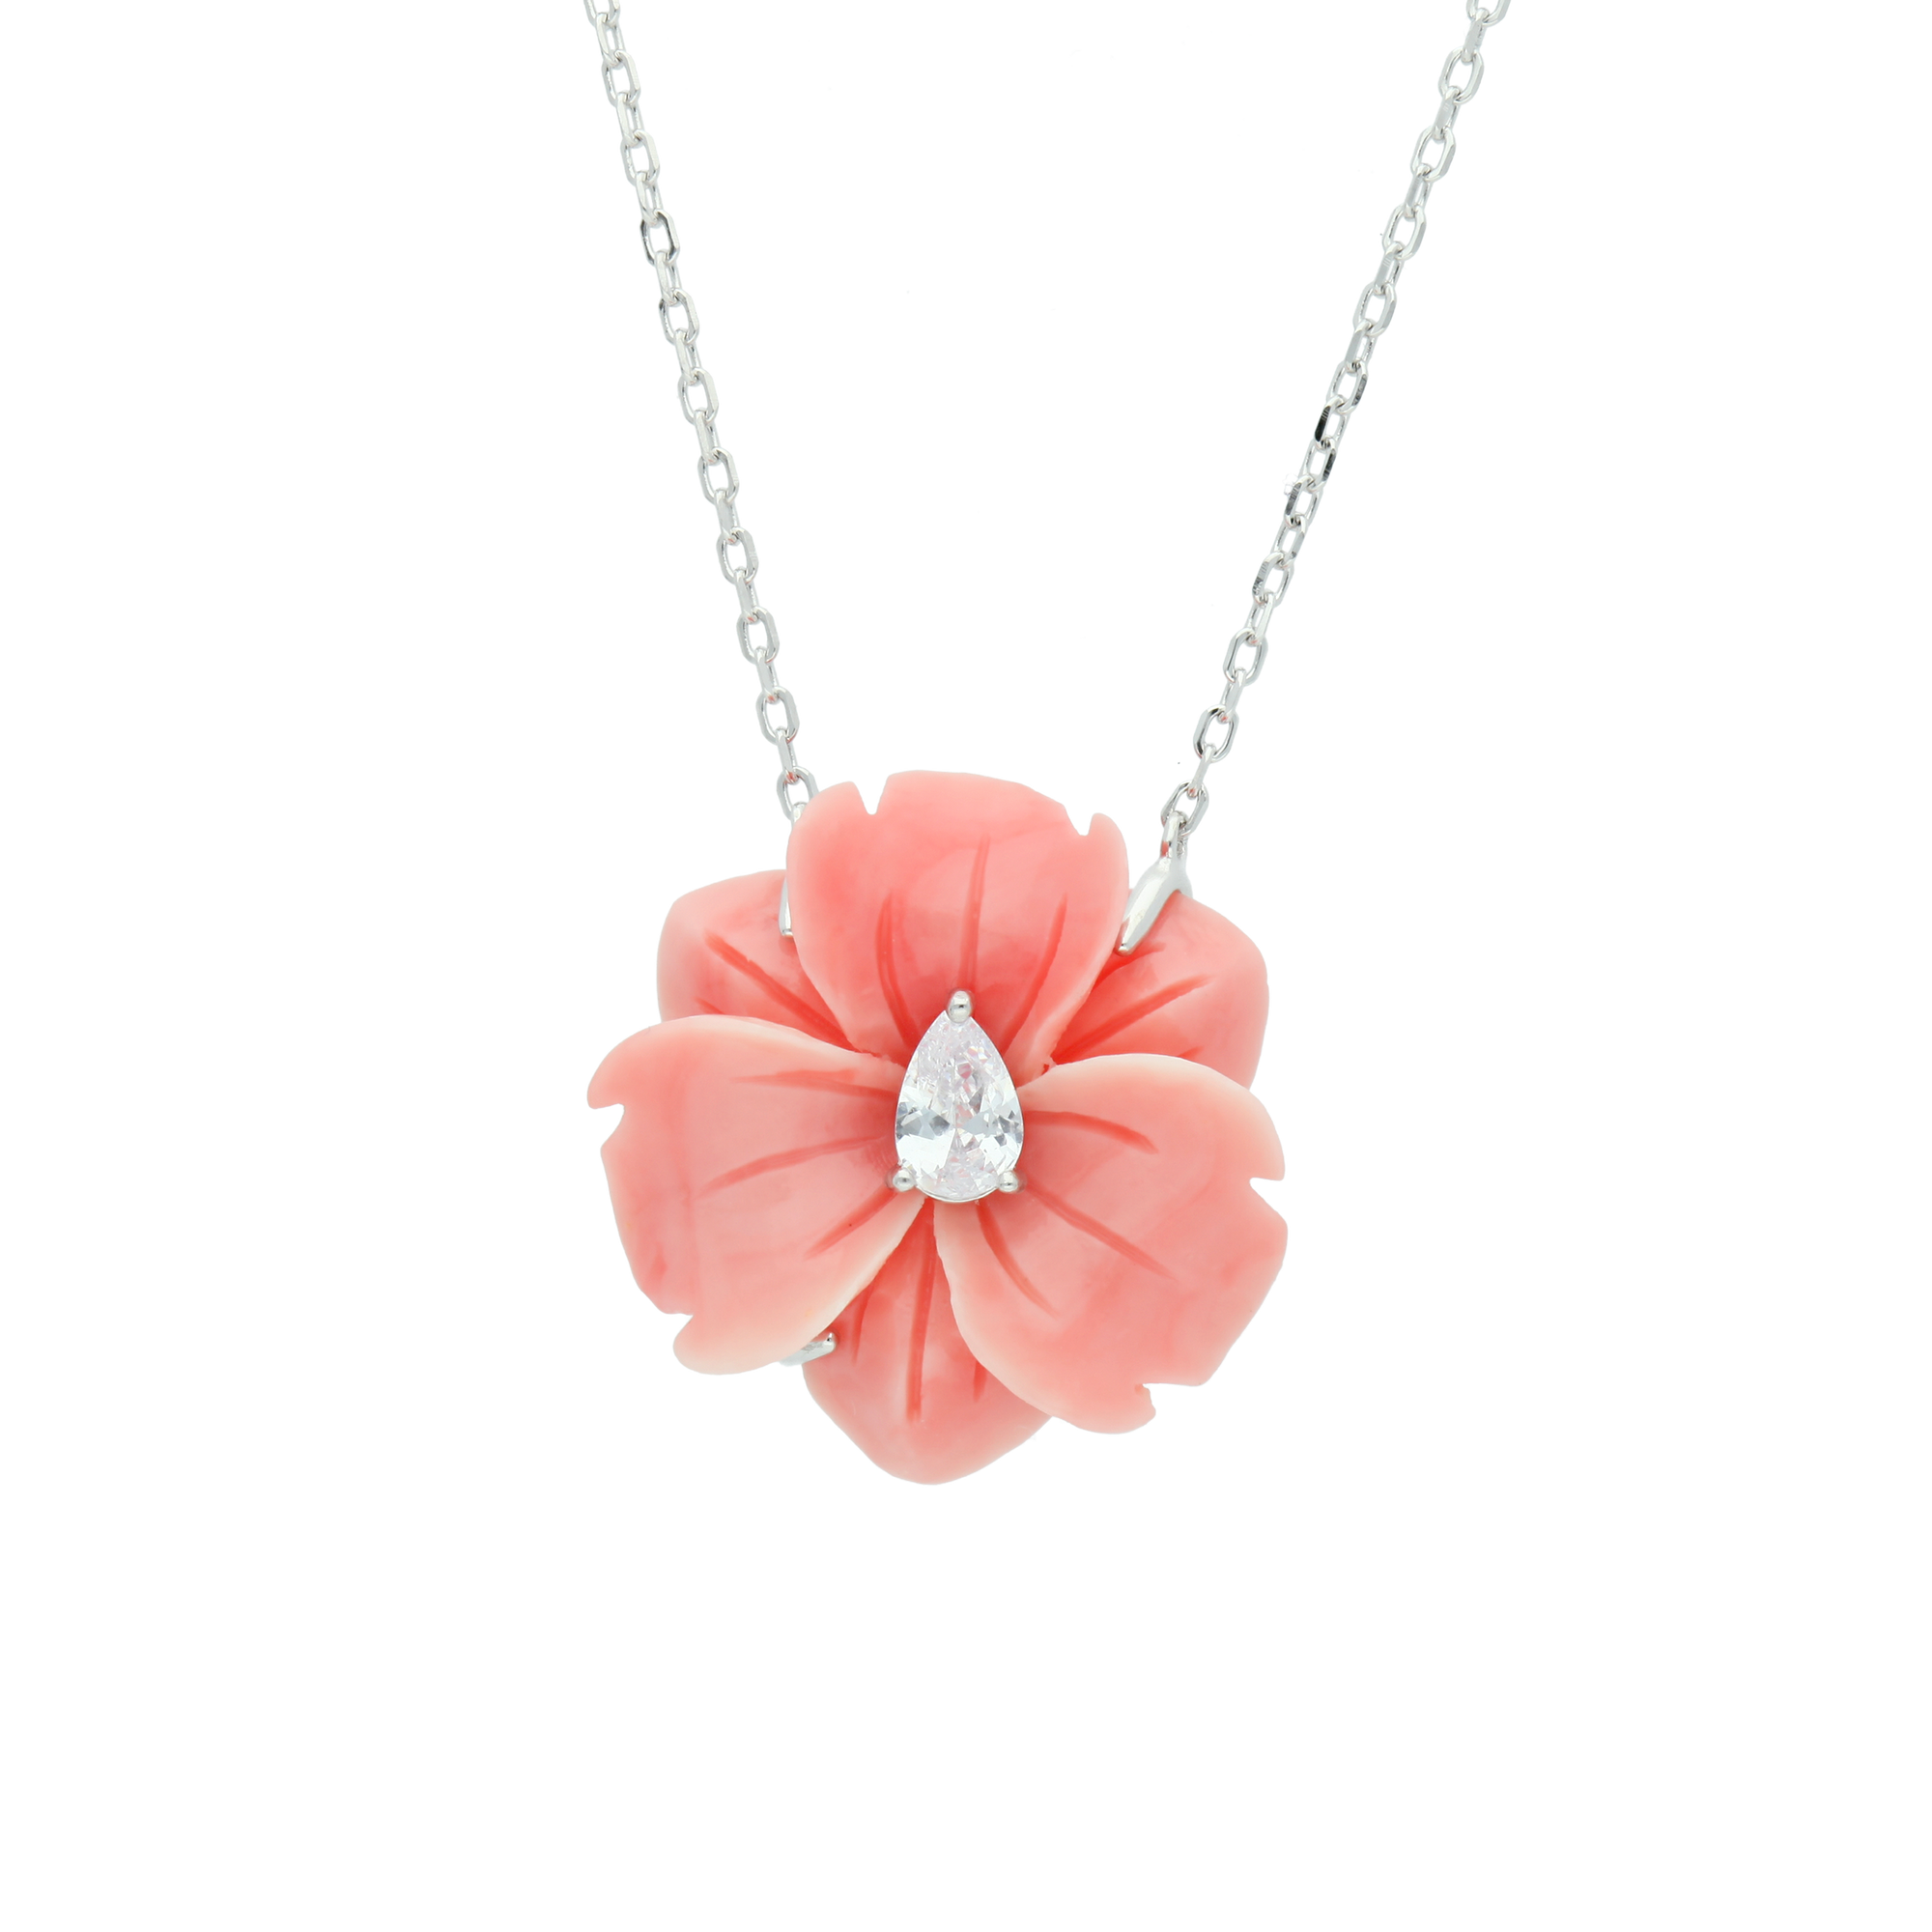 Spring Flowers Necklace - penelope-it.com